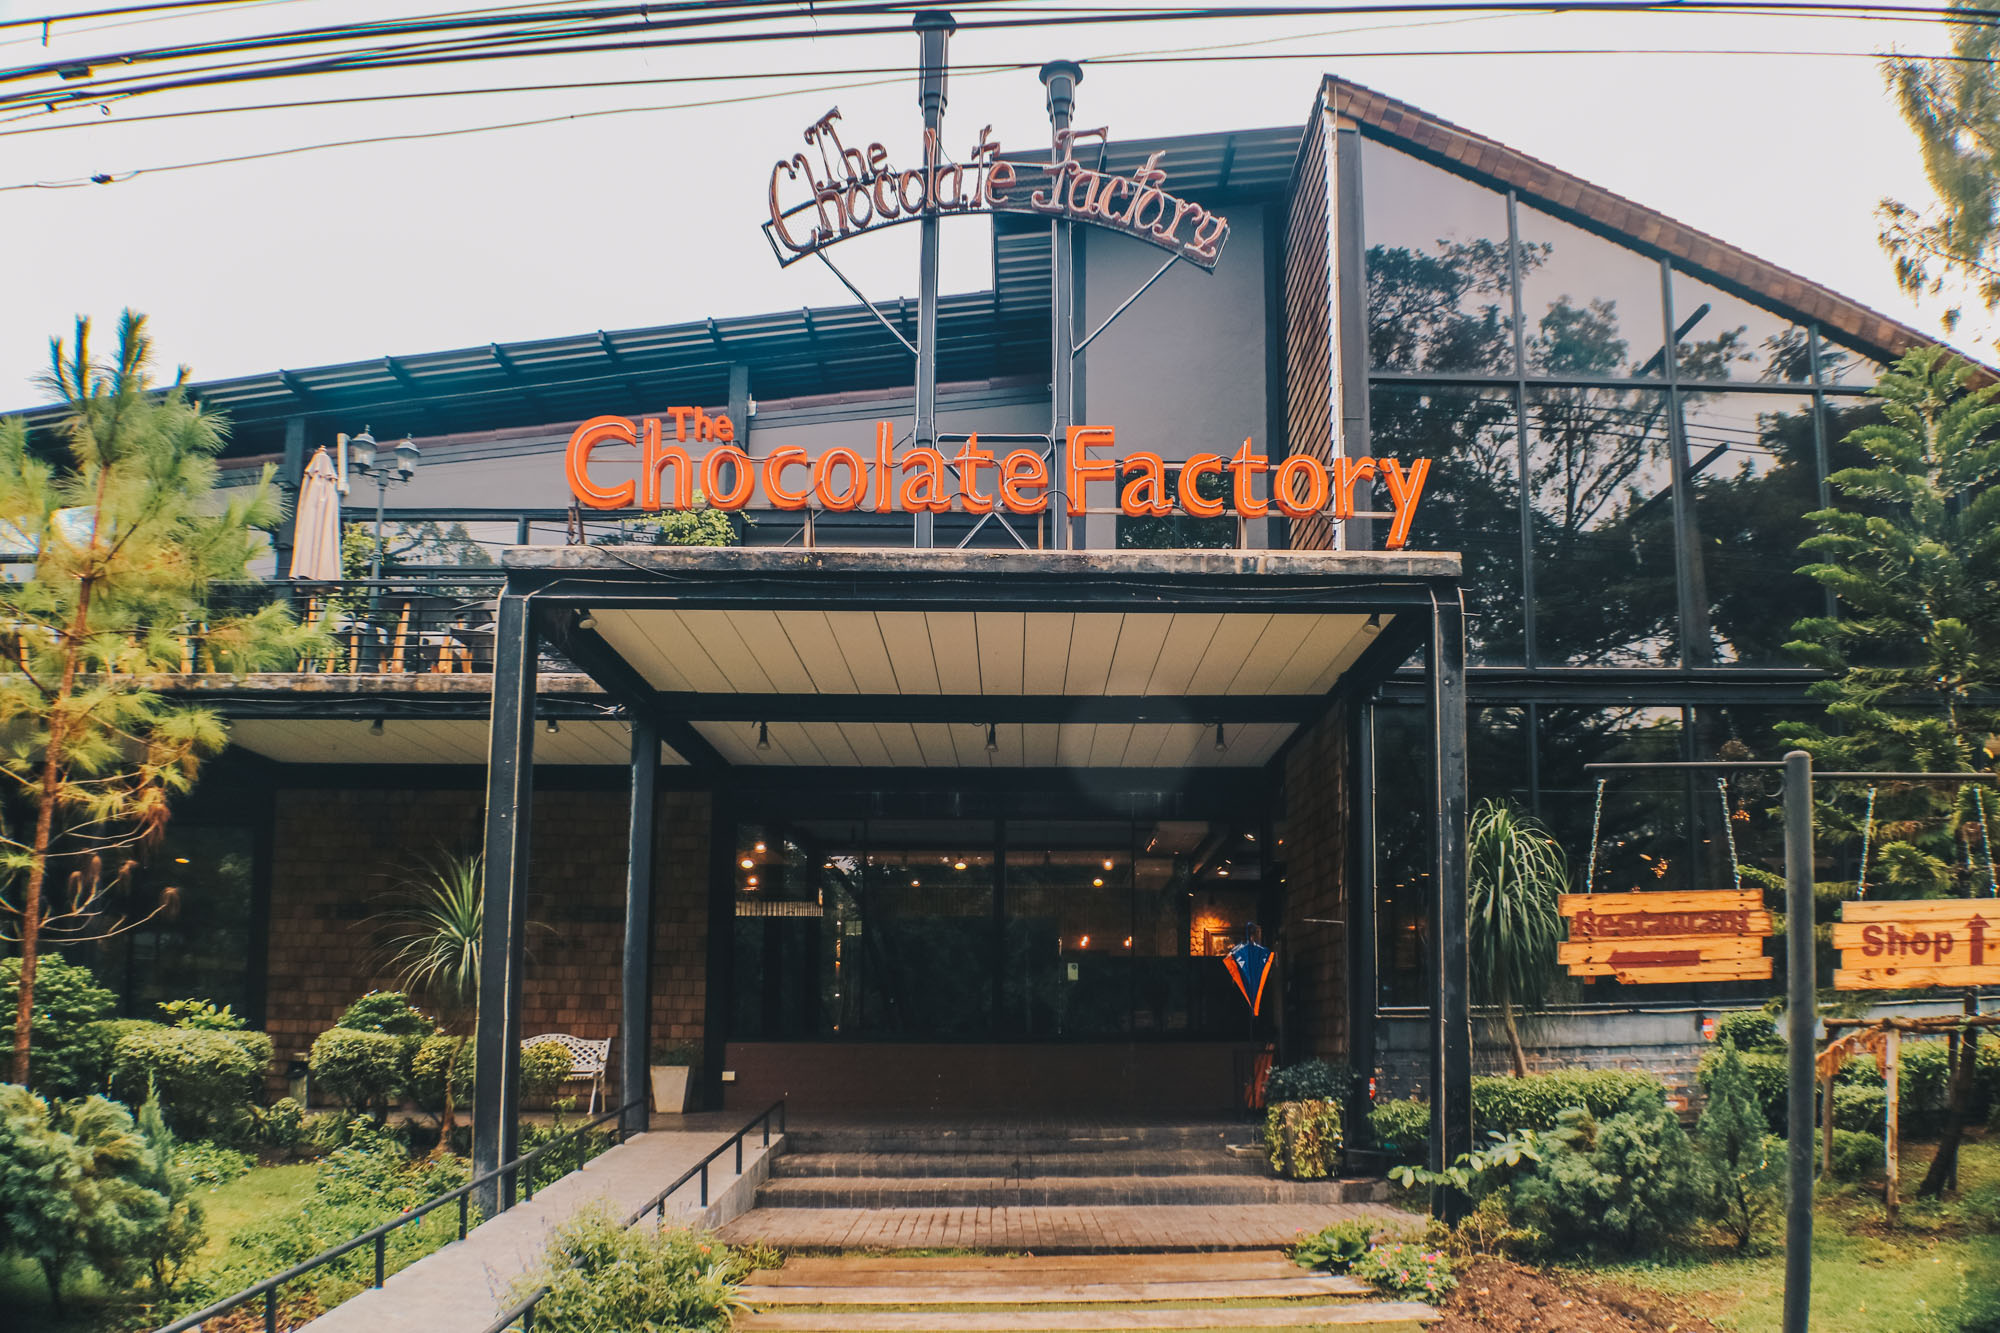 khao yai chocolate factory tour